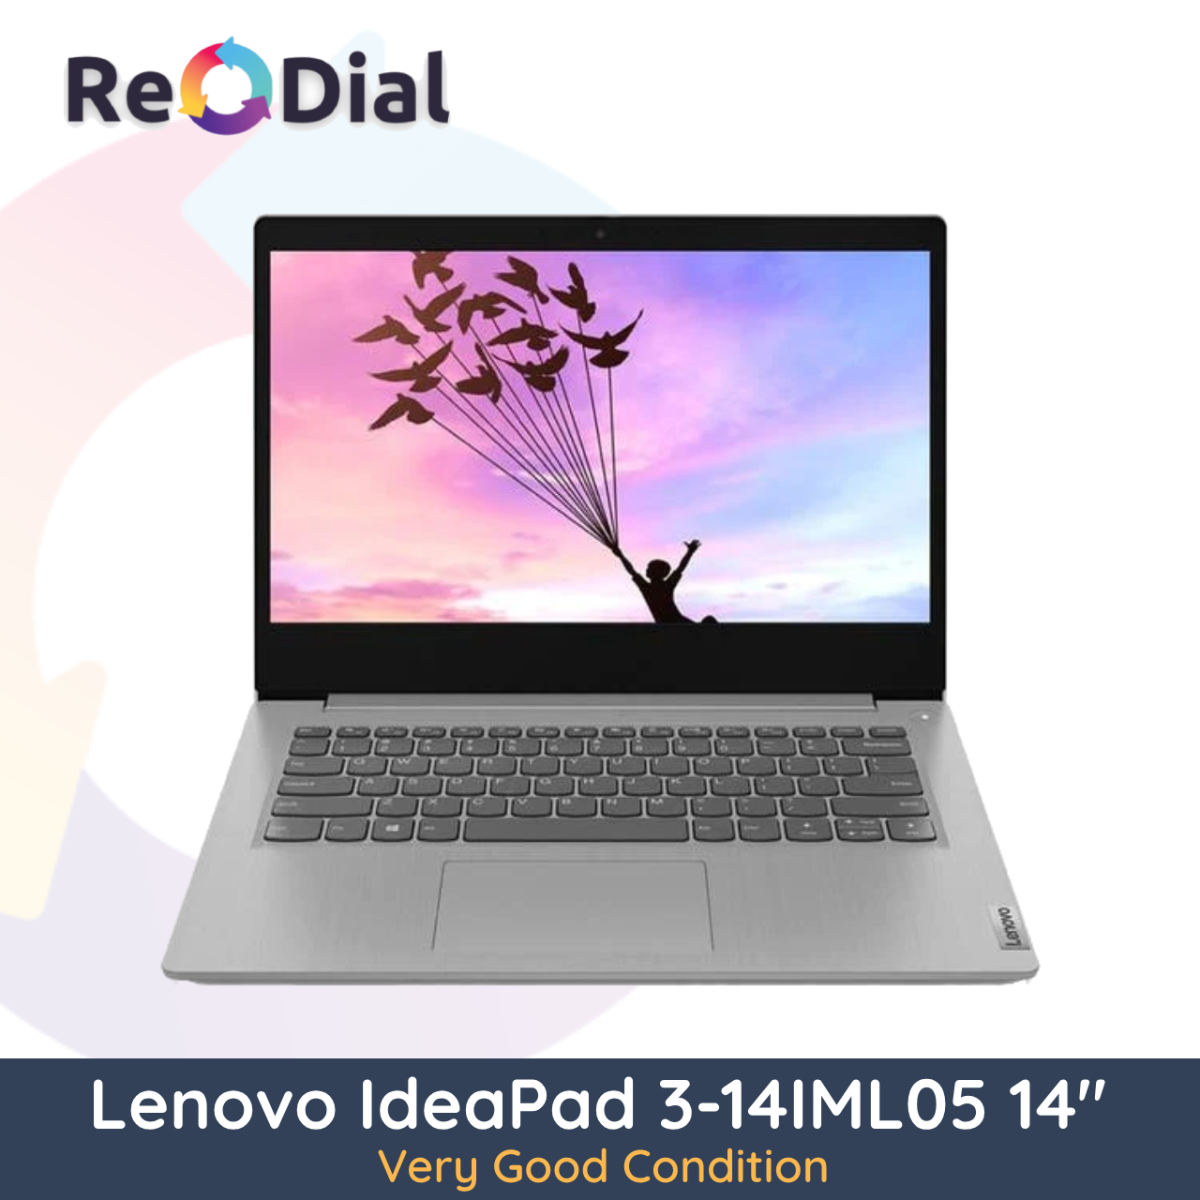 Lenovo IdeaPad 3-14IML05 14" Laptop i5-10210U 256GB 8GB RAM - Very Good Condition